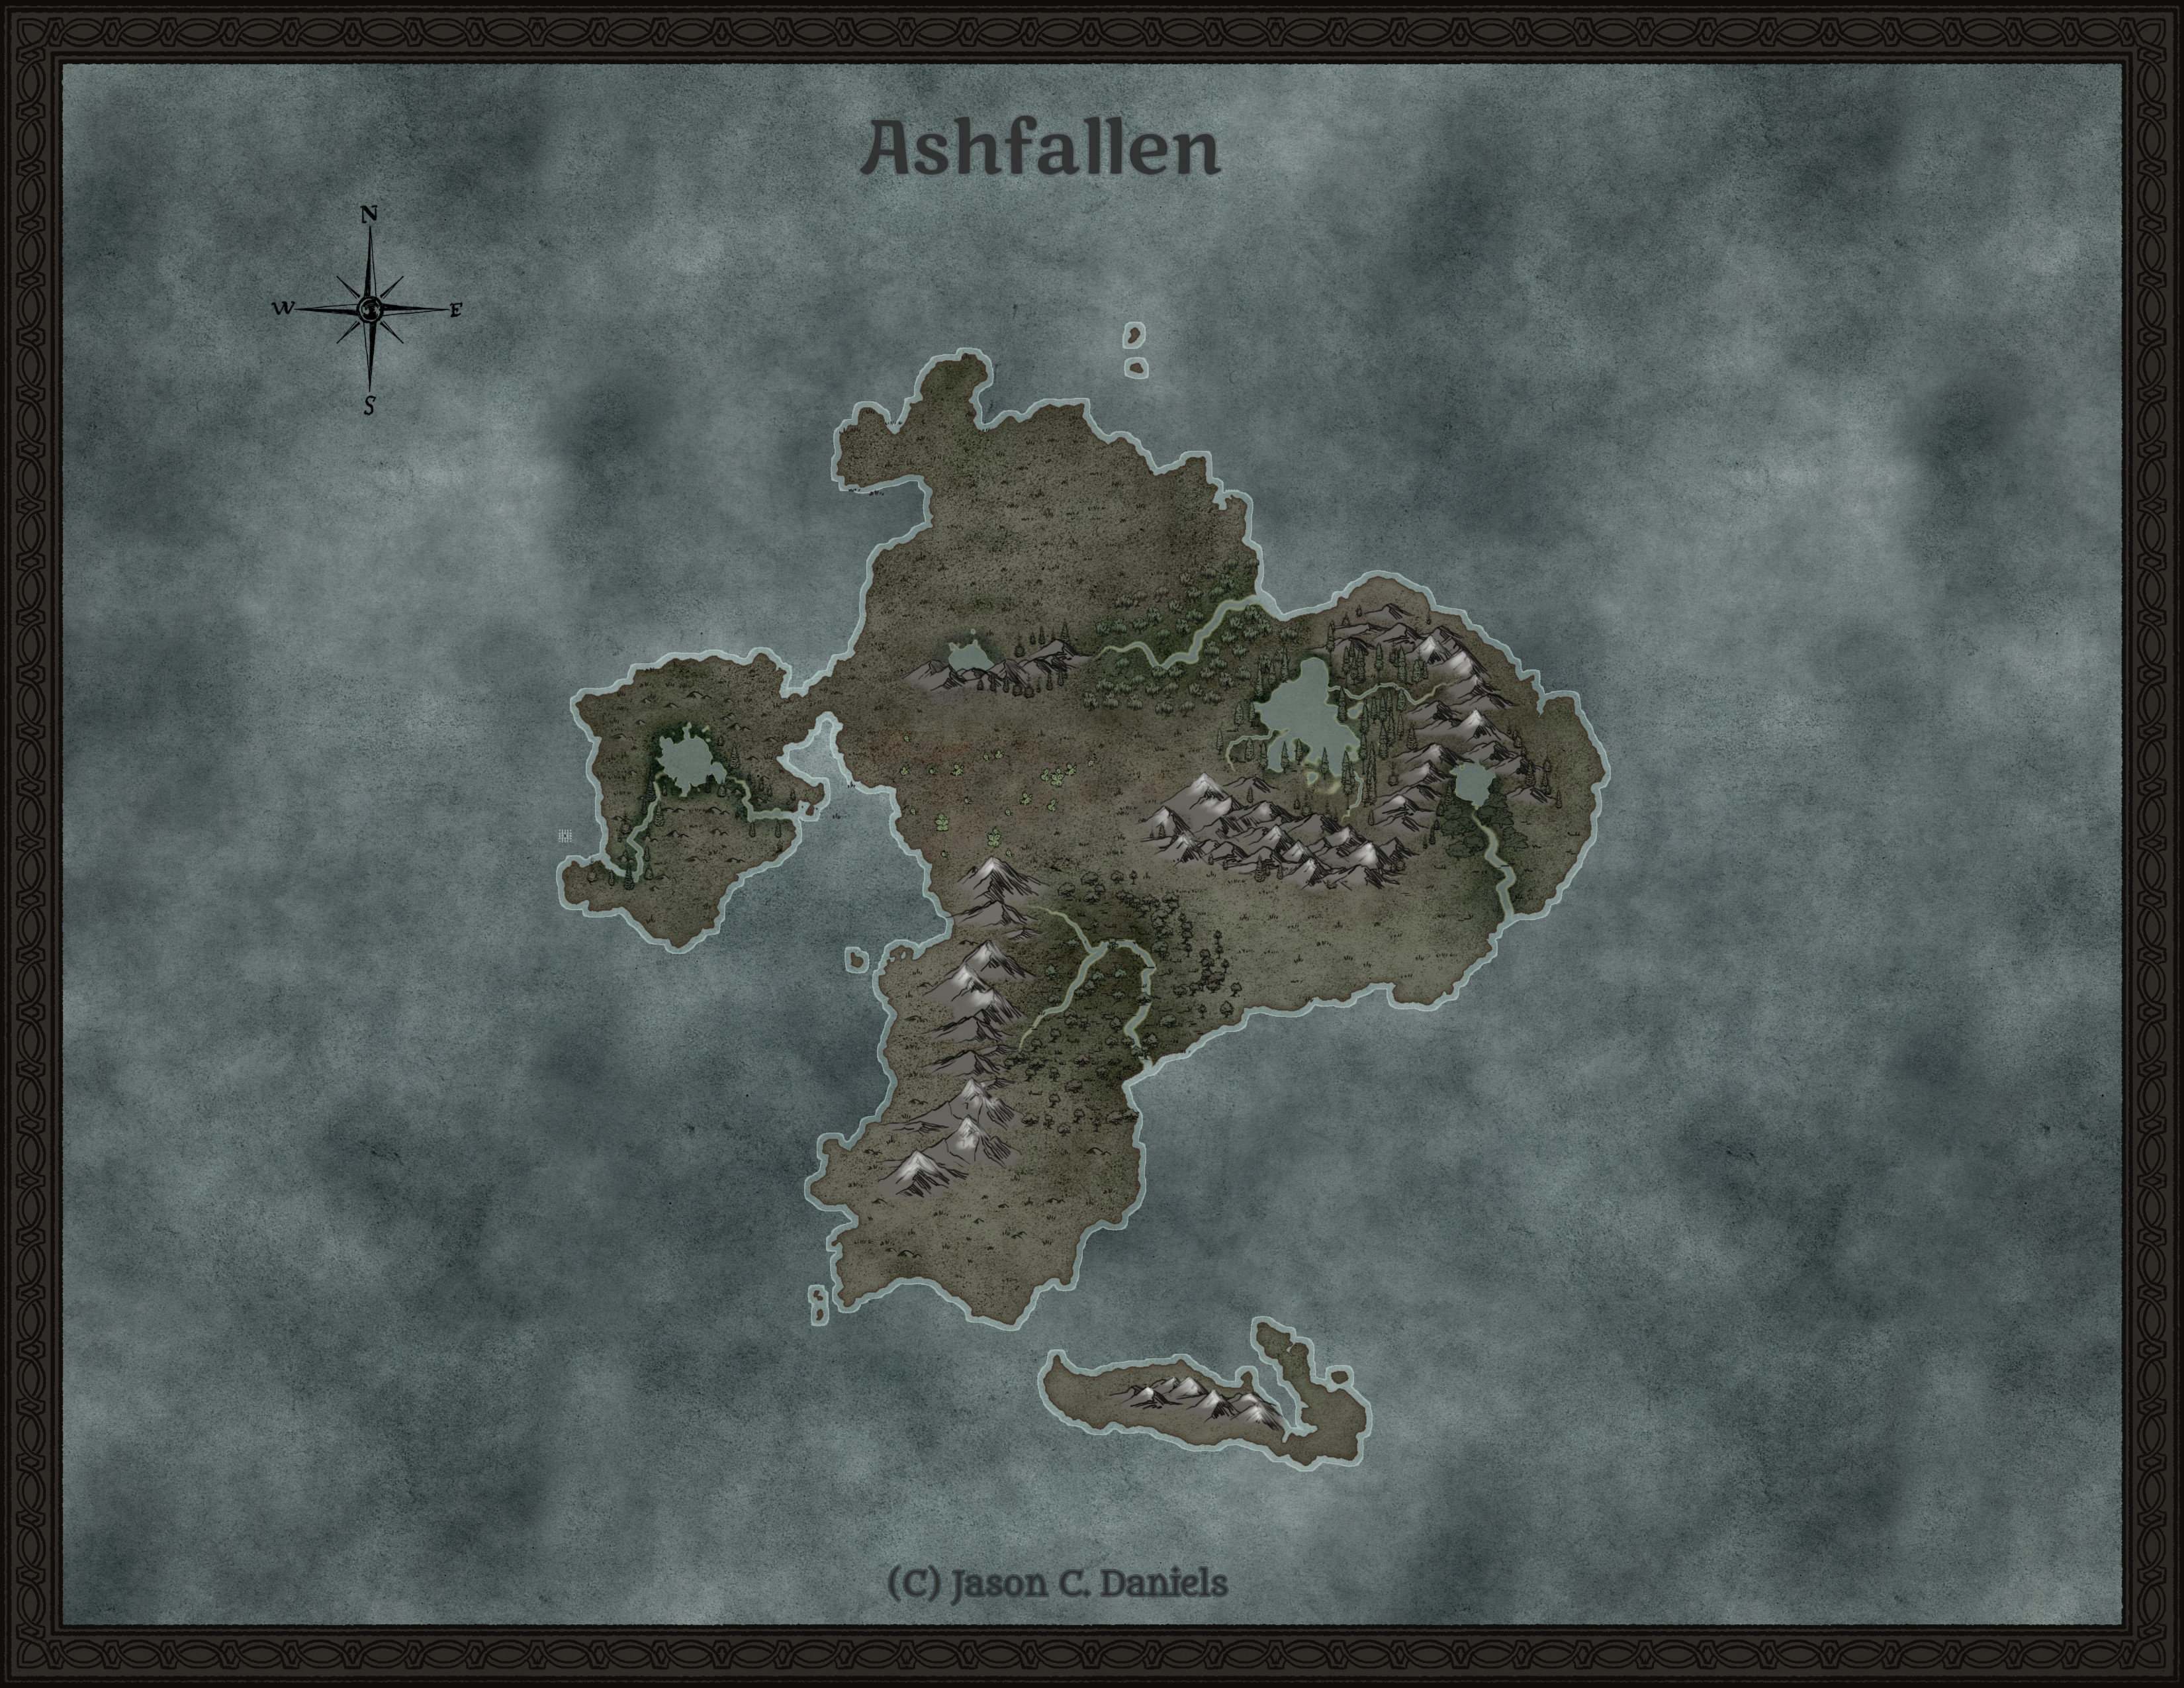 The world of Ashfallen